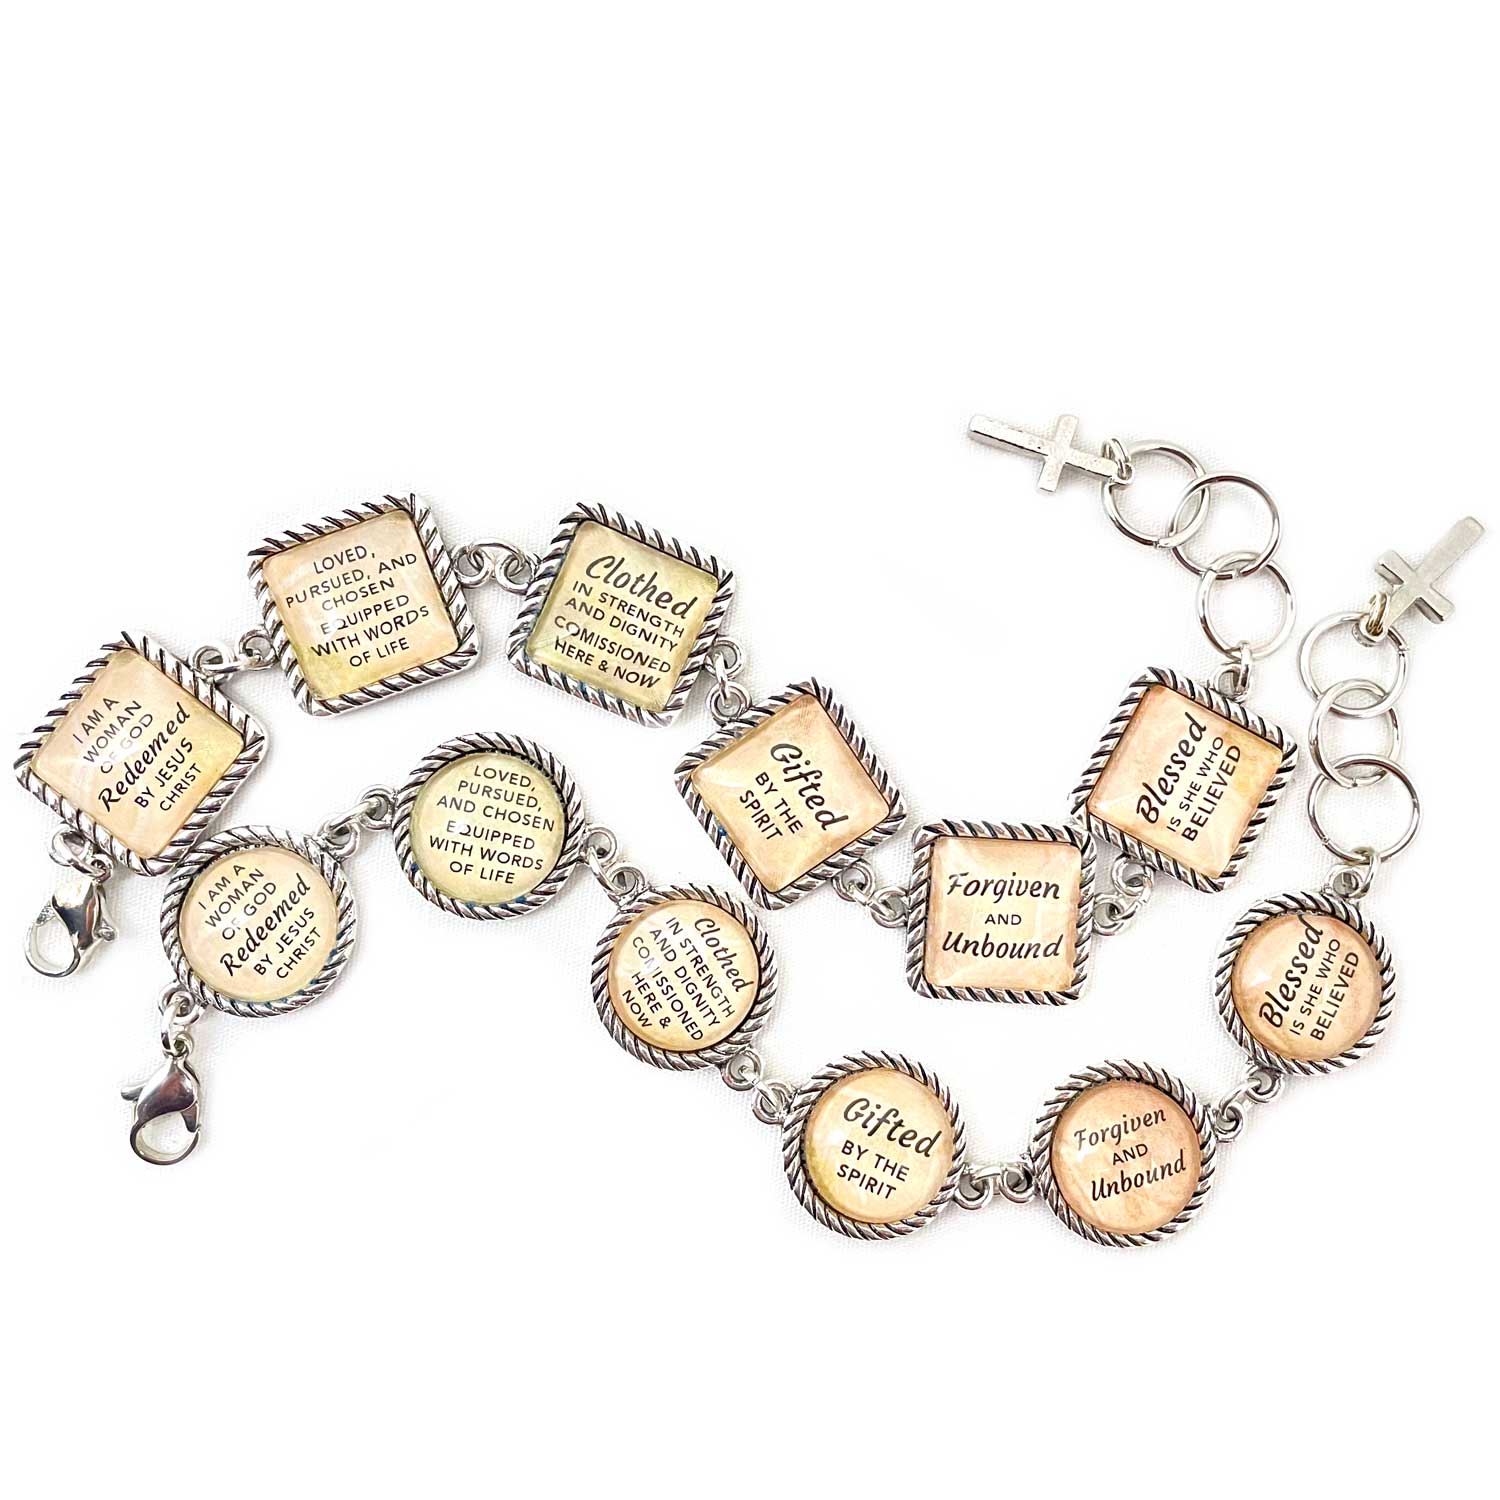 Christian Affirmation Charm Bracelet - Personalized, Antique Silver Square Design Bijou Her